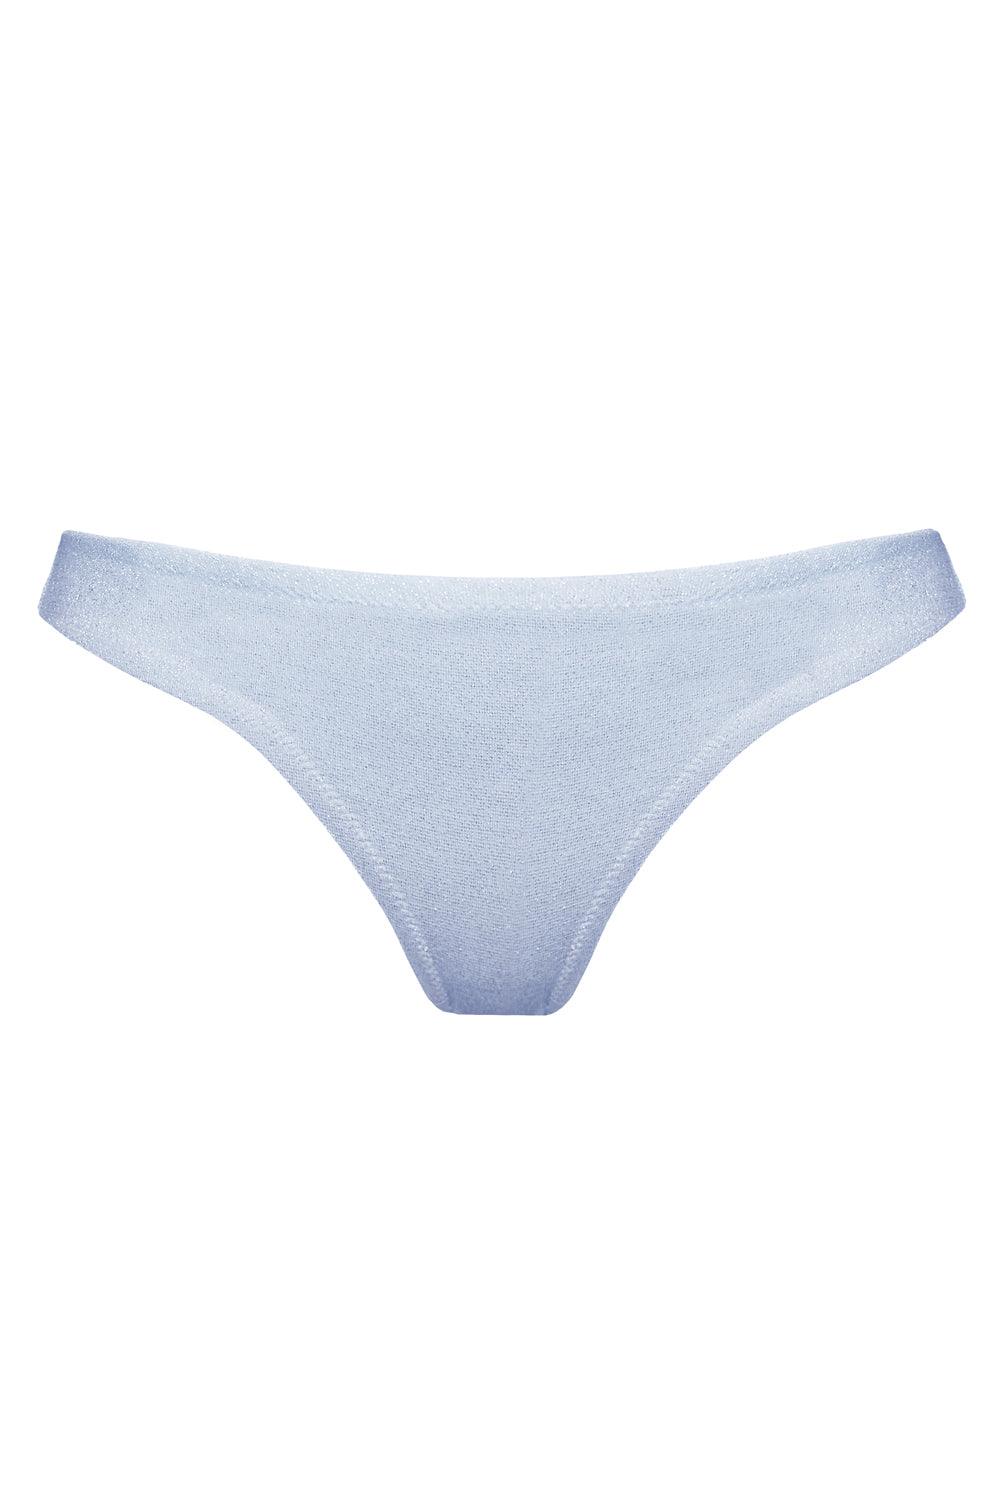 Ariel Sky bikini bottom - Bikini bottom by Love Jilty. Shop on yesUndress